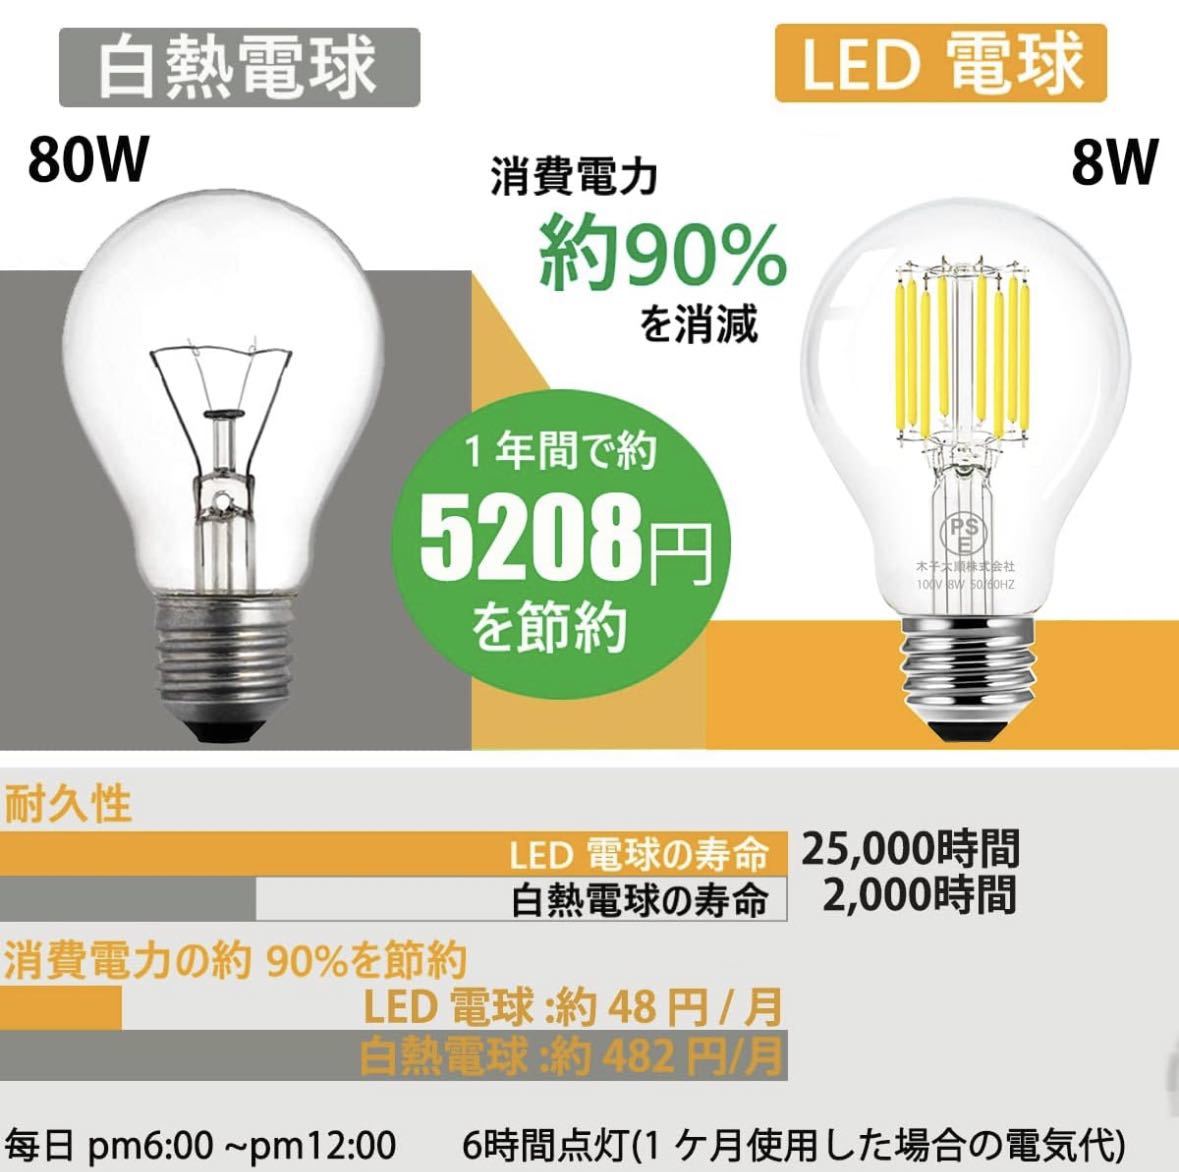 691) Acidea LEDシャンデリア電球 E26口金 LED電球 80W形エジソン電球 4000K 昼白色 8W LED フィラメント電球 高輝度 調光器対応 4個入_画像4